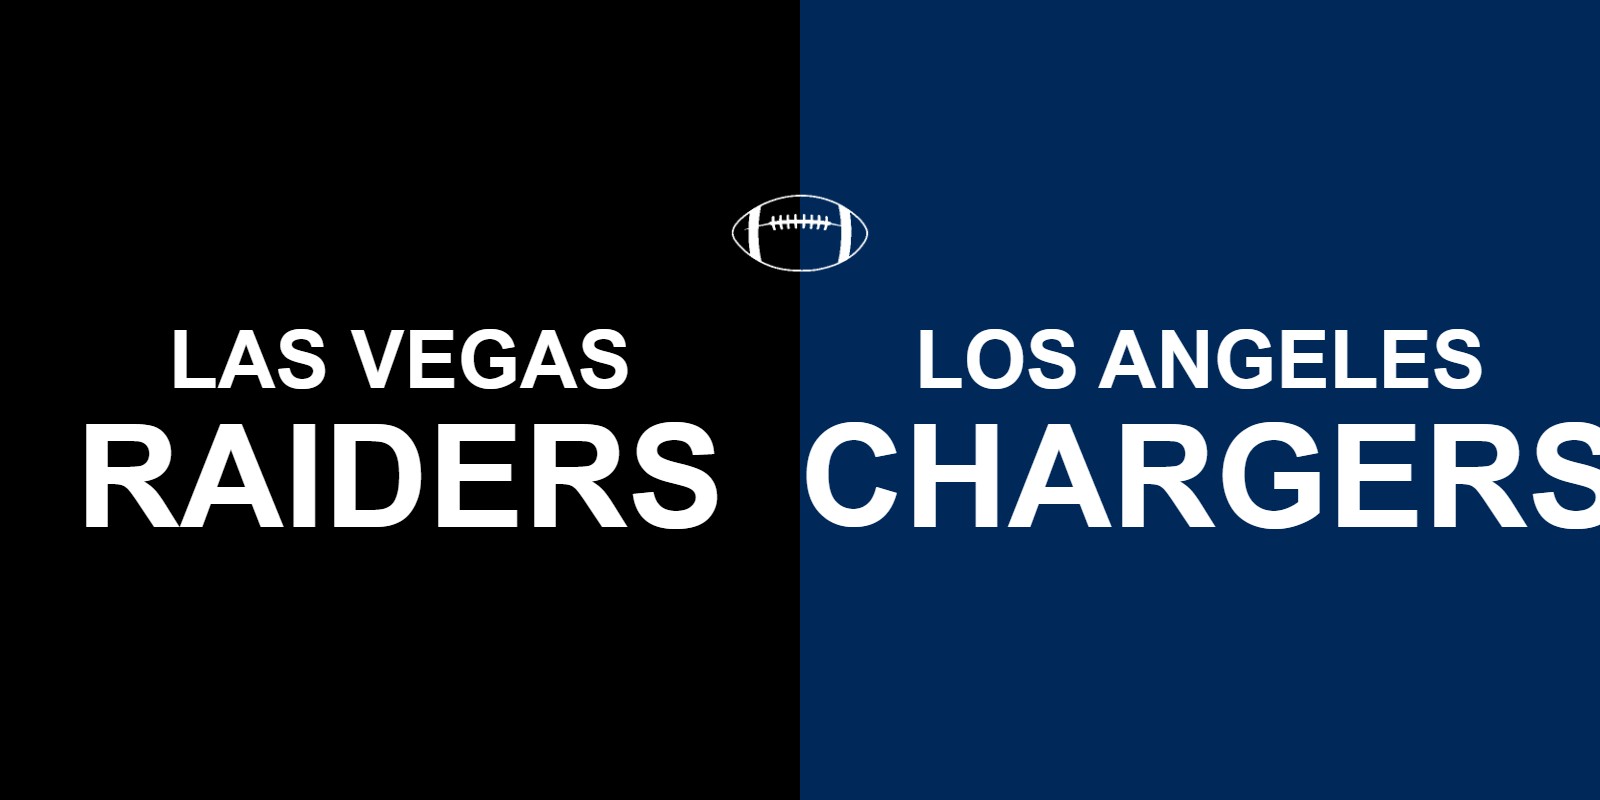 Raiders vs Chargers